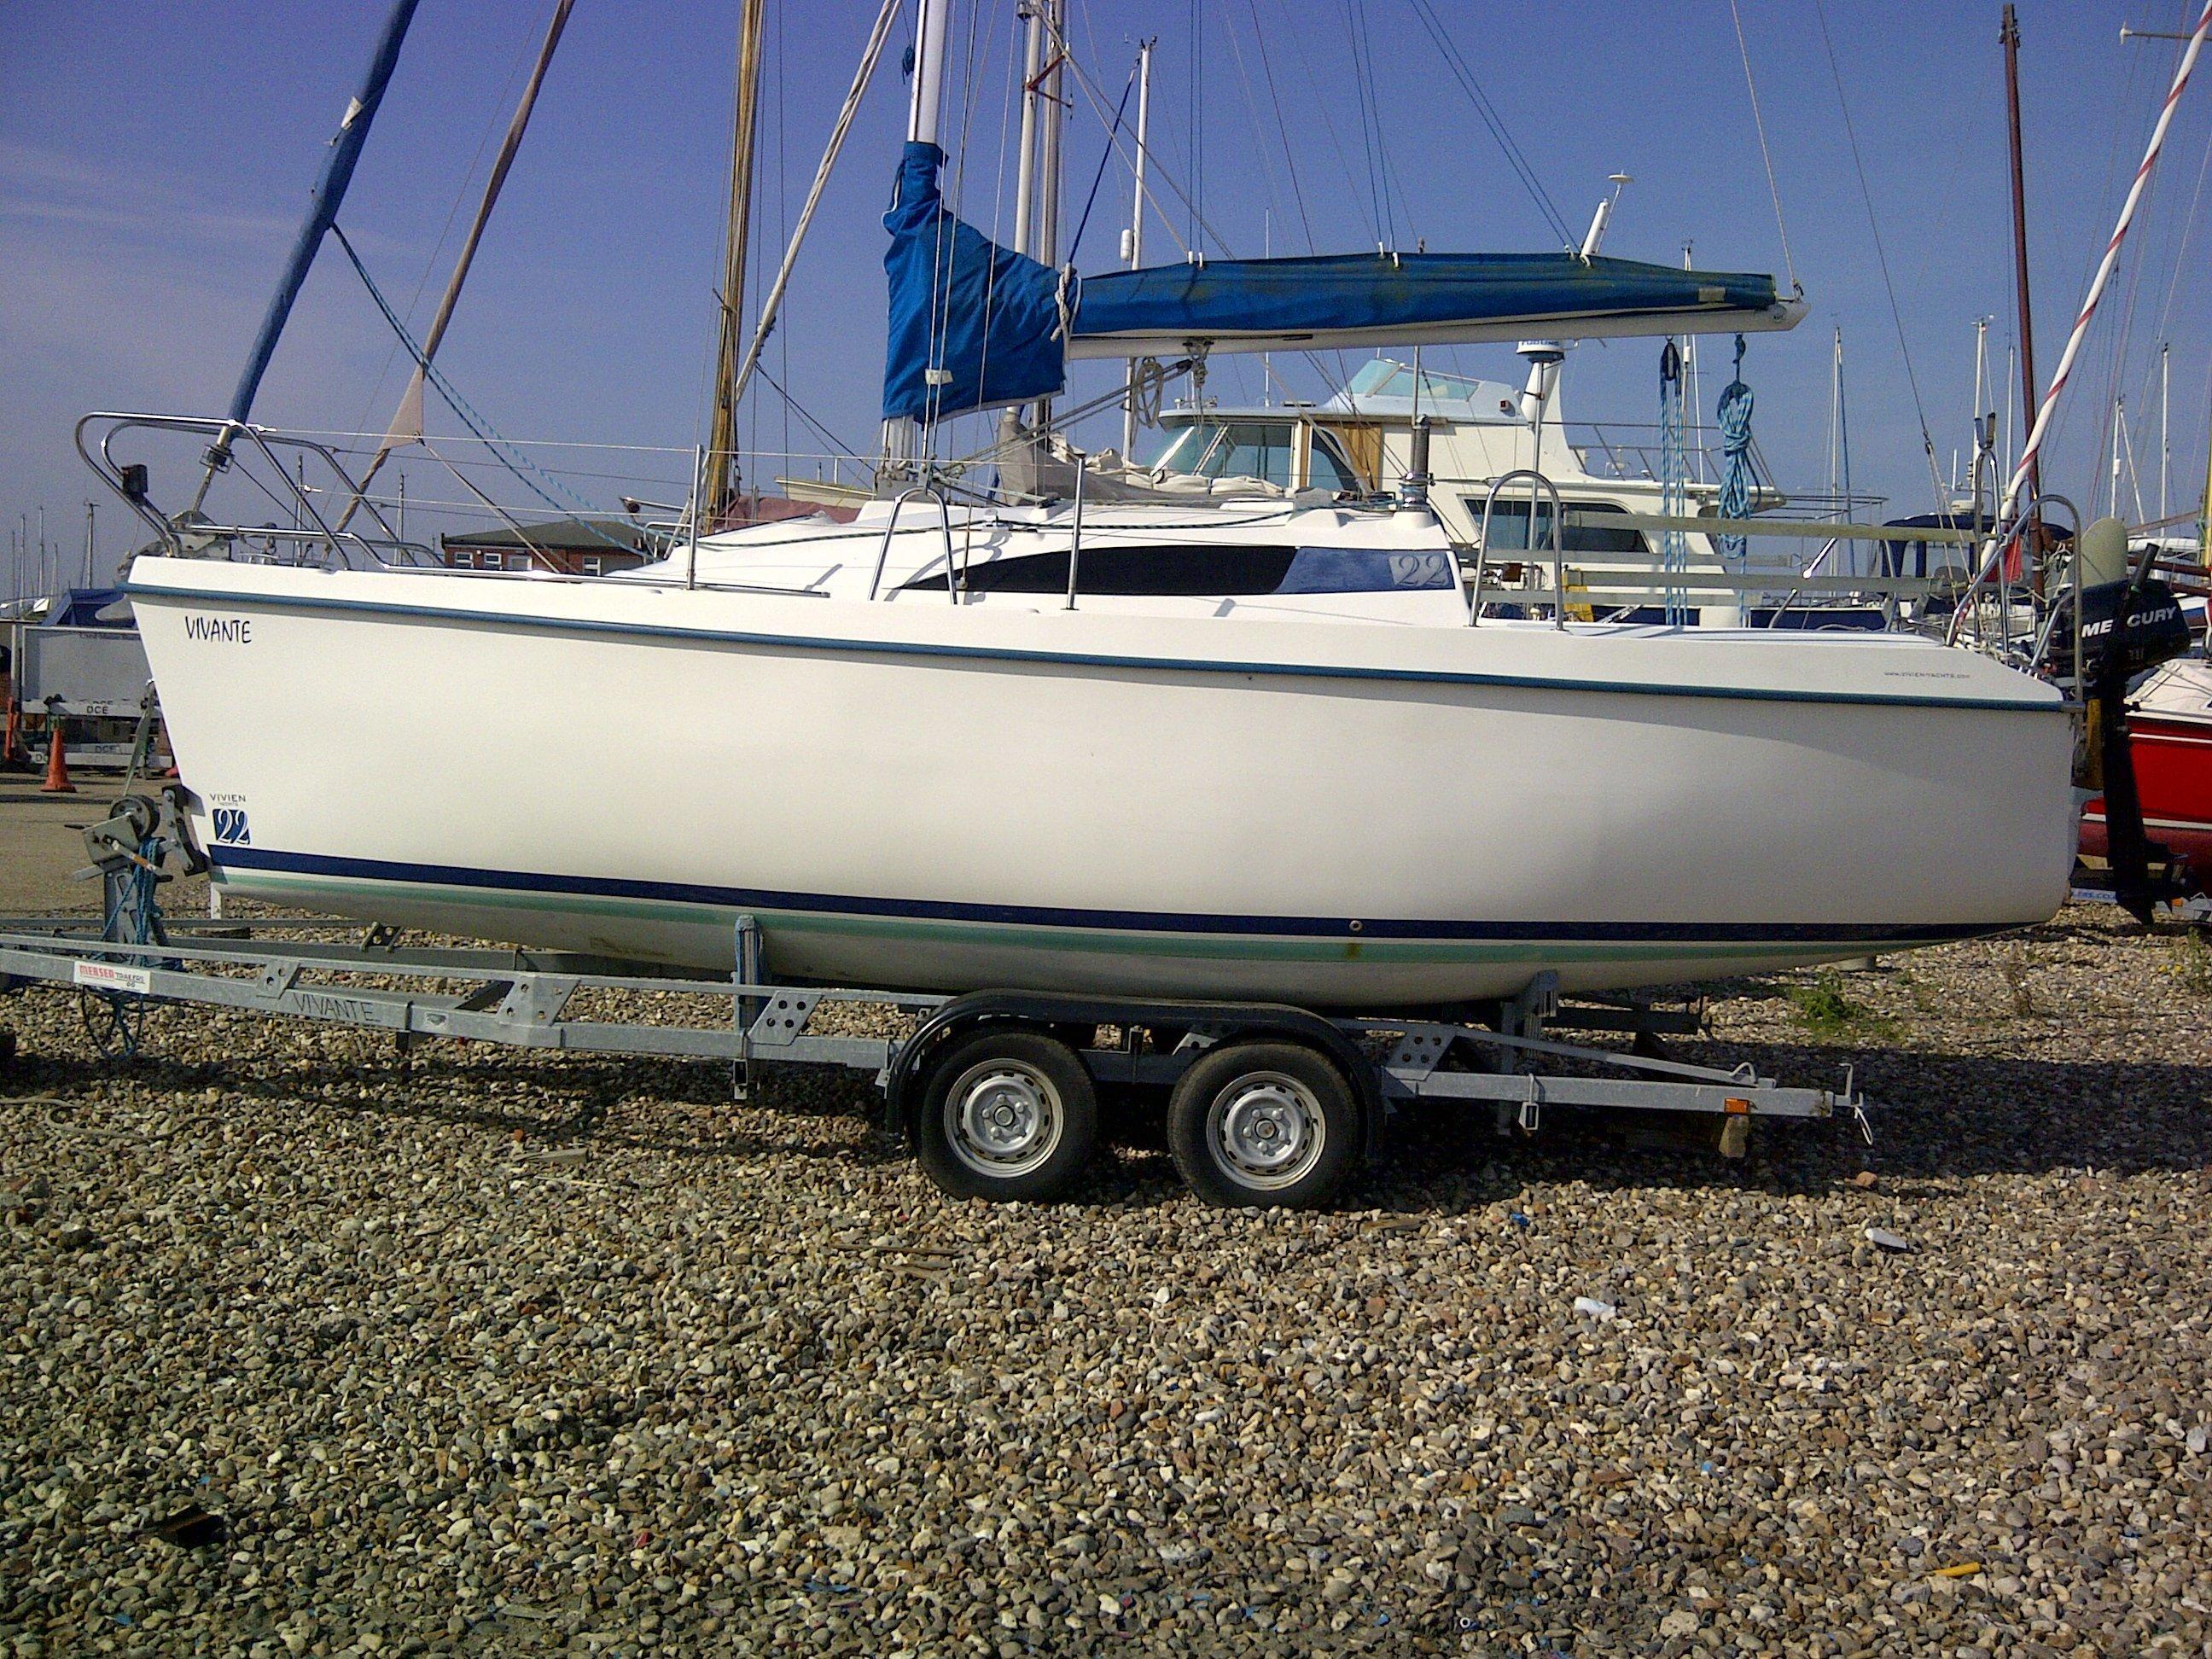 Vivien 22 Lift keel yacht, Titchmarsh Marina, Essex